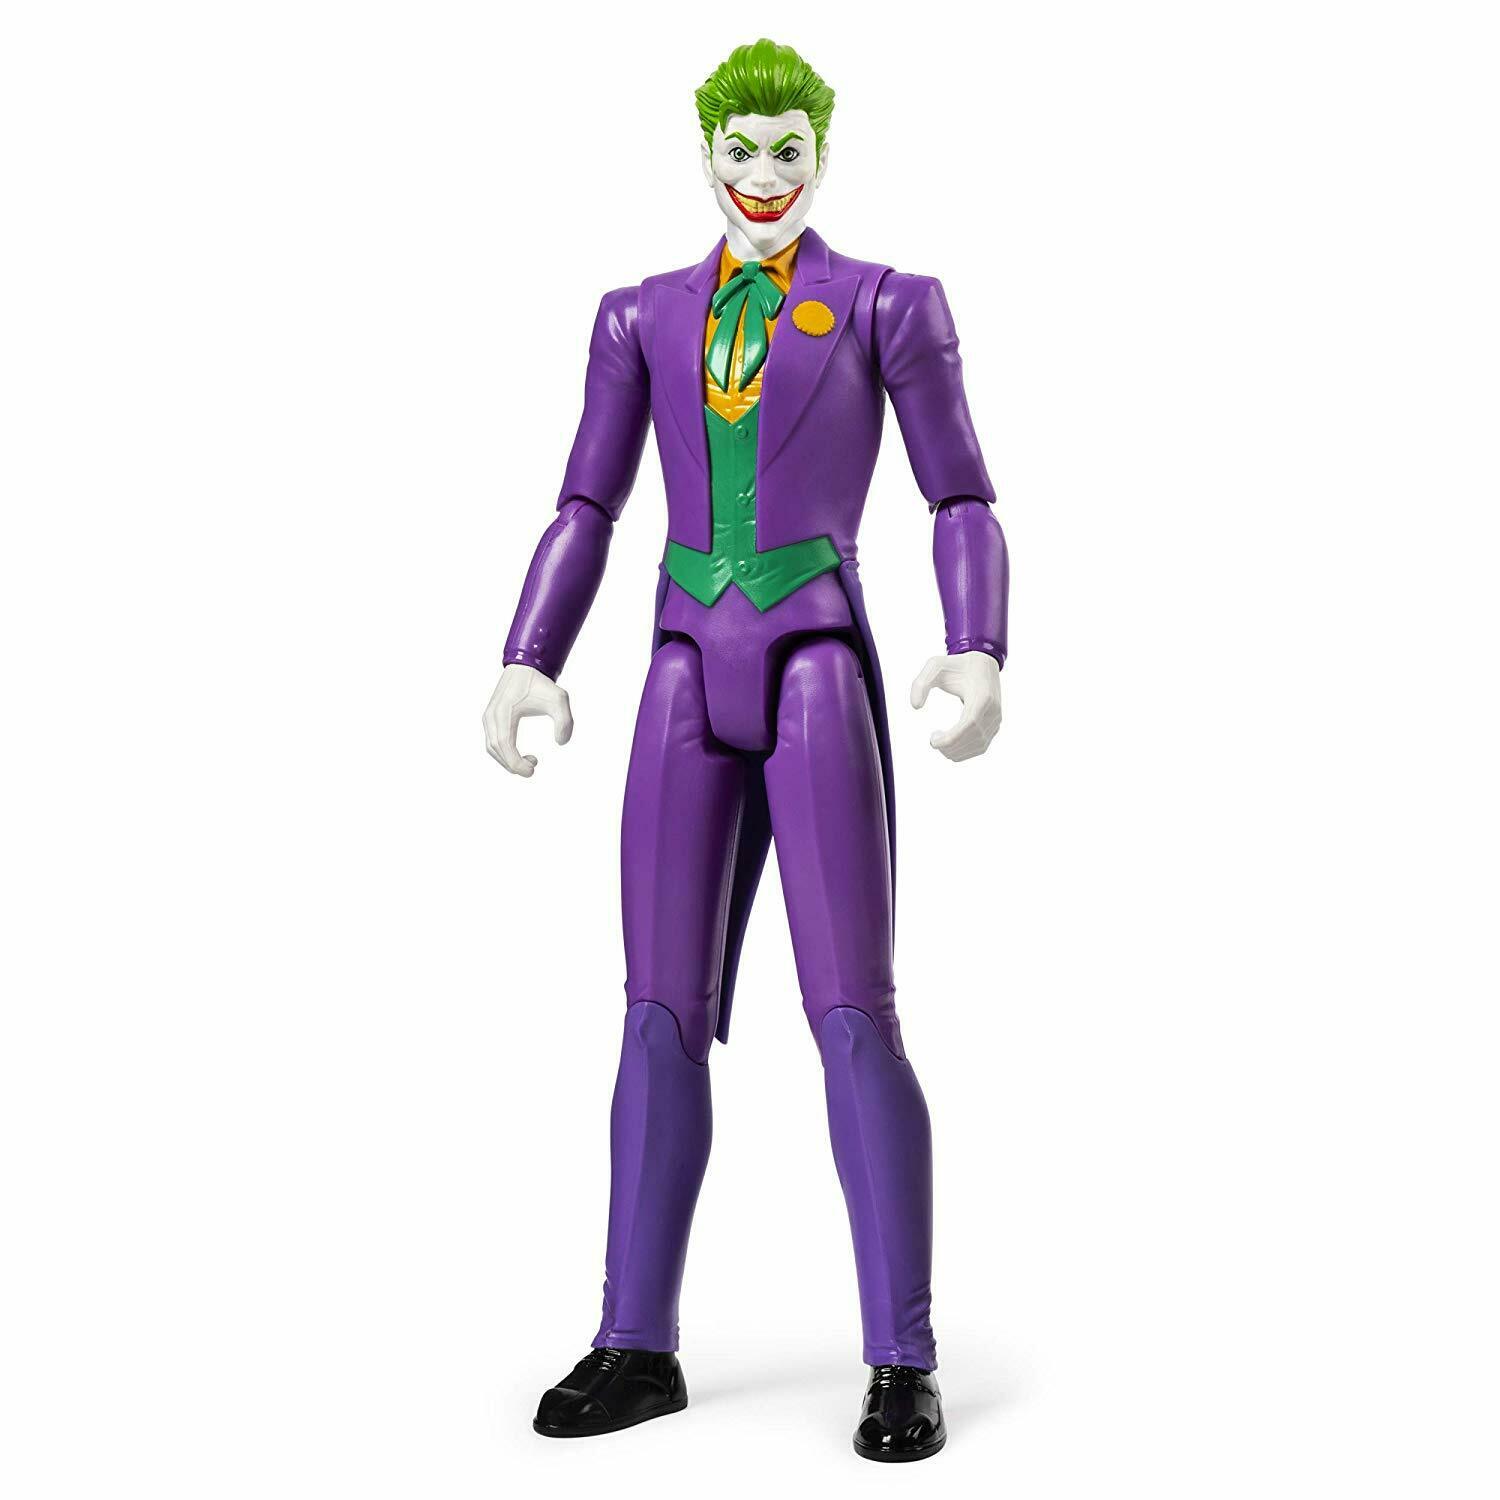 30 cm Figure - Joker